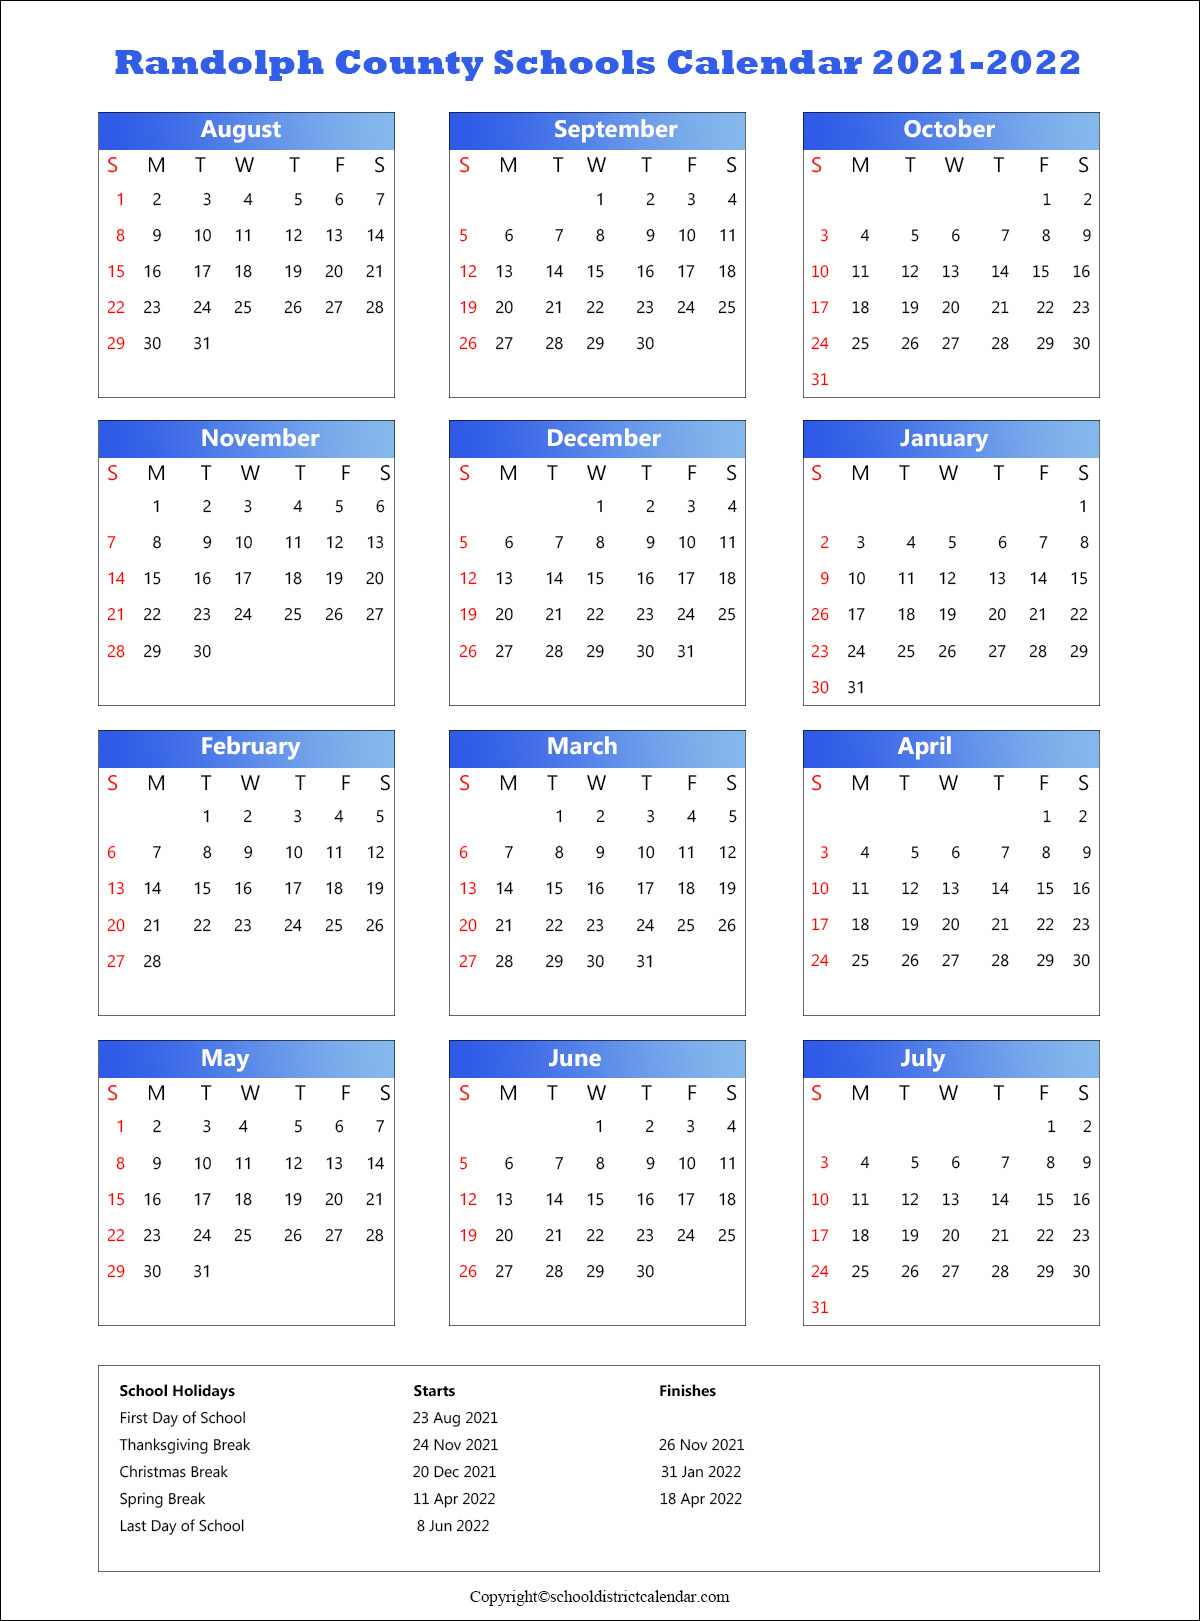 Randolph County Schools Calendar Holidays 2021 2022